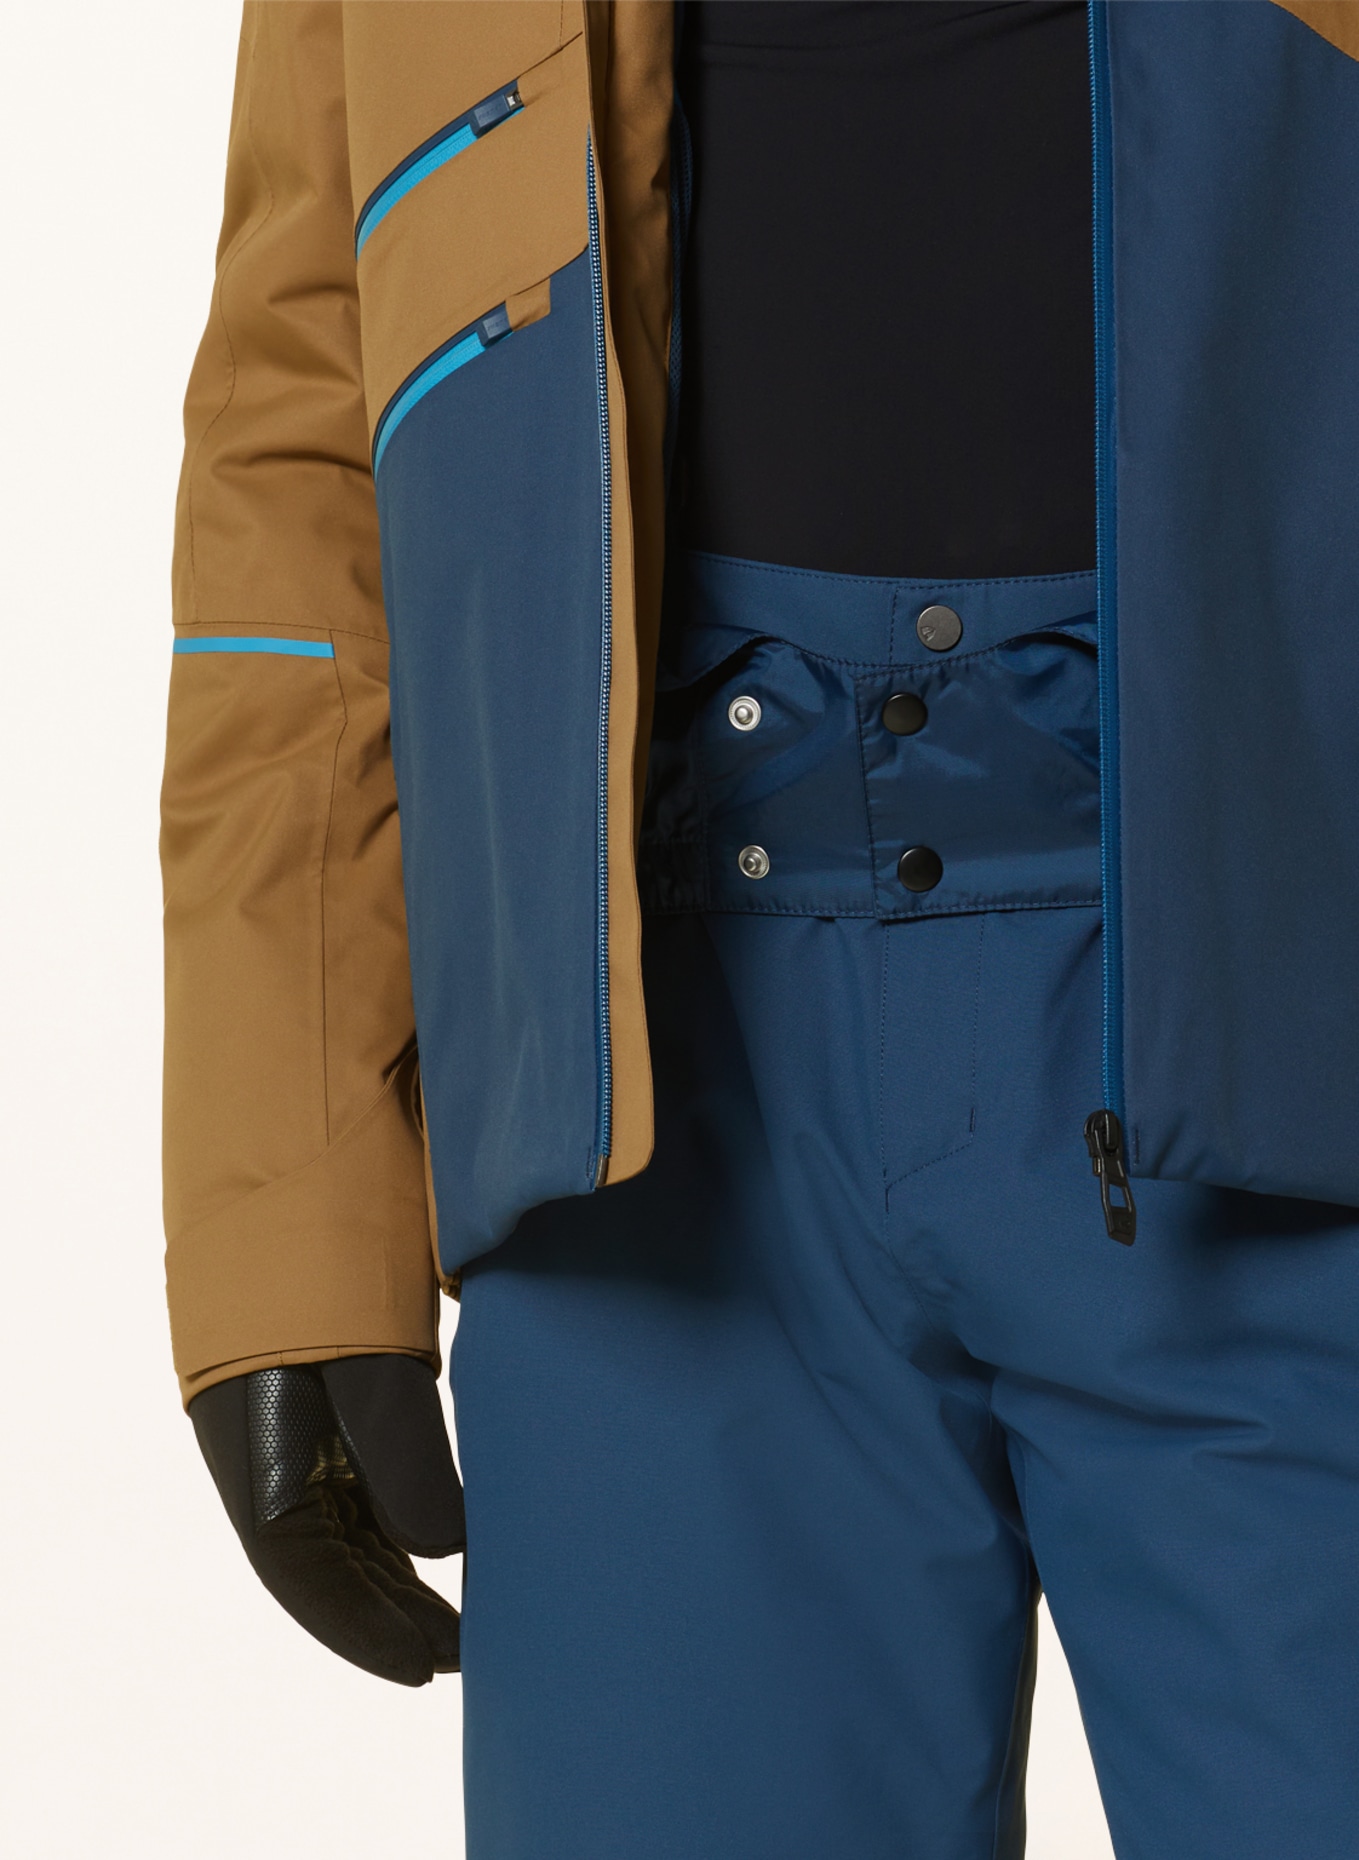 Ski TOACA ziener in jacket dark blue brown/